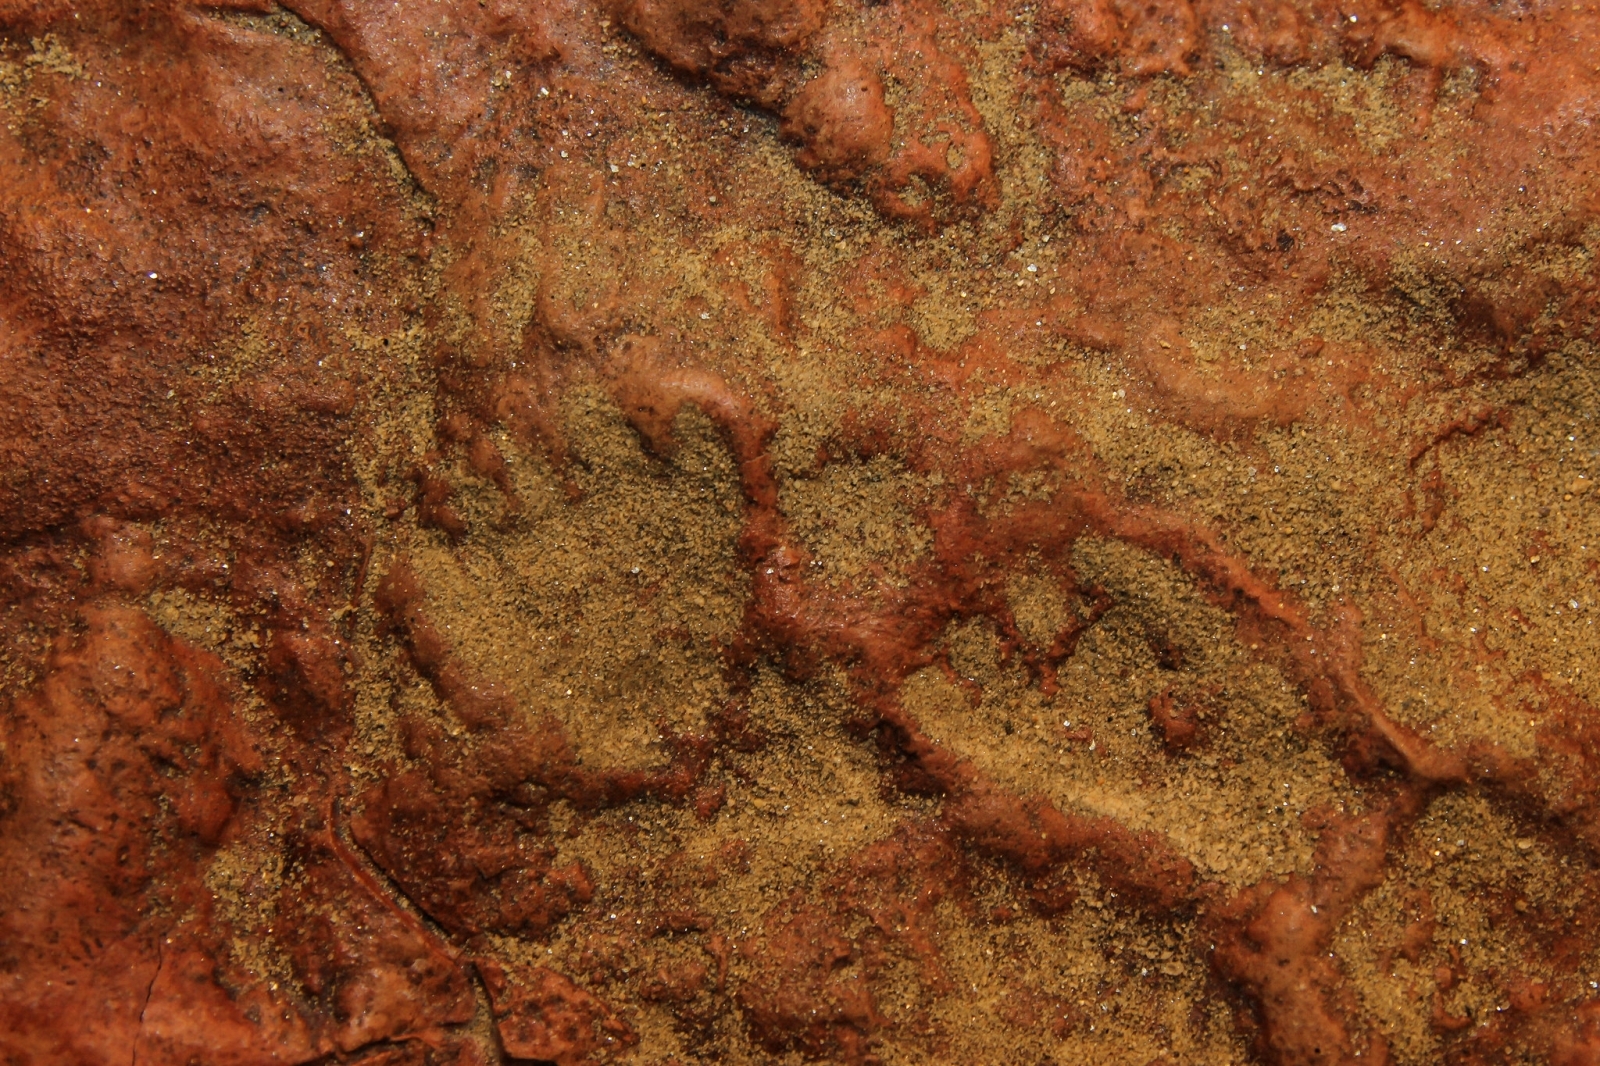 100-million-year old dinosaur tracks